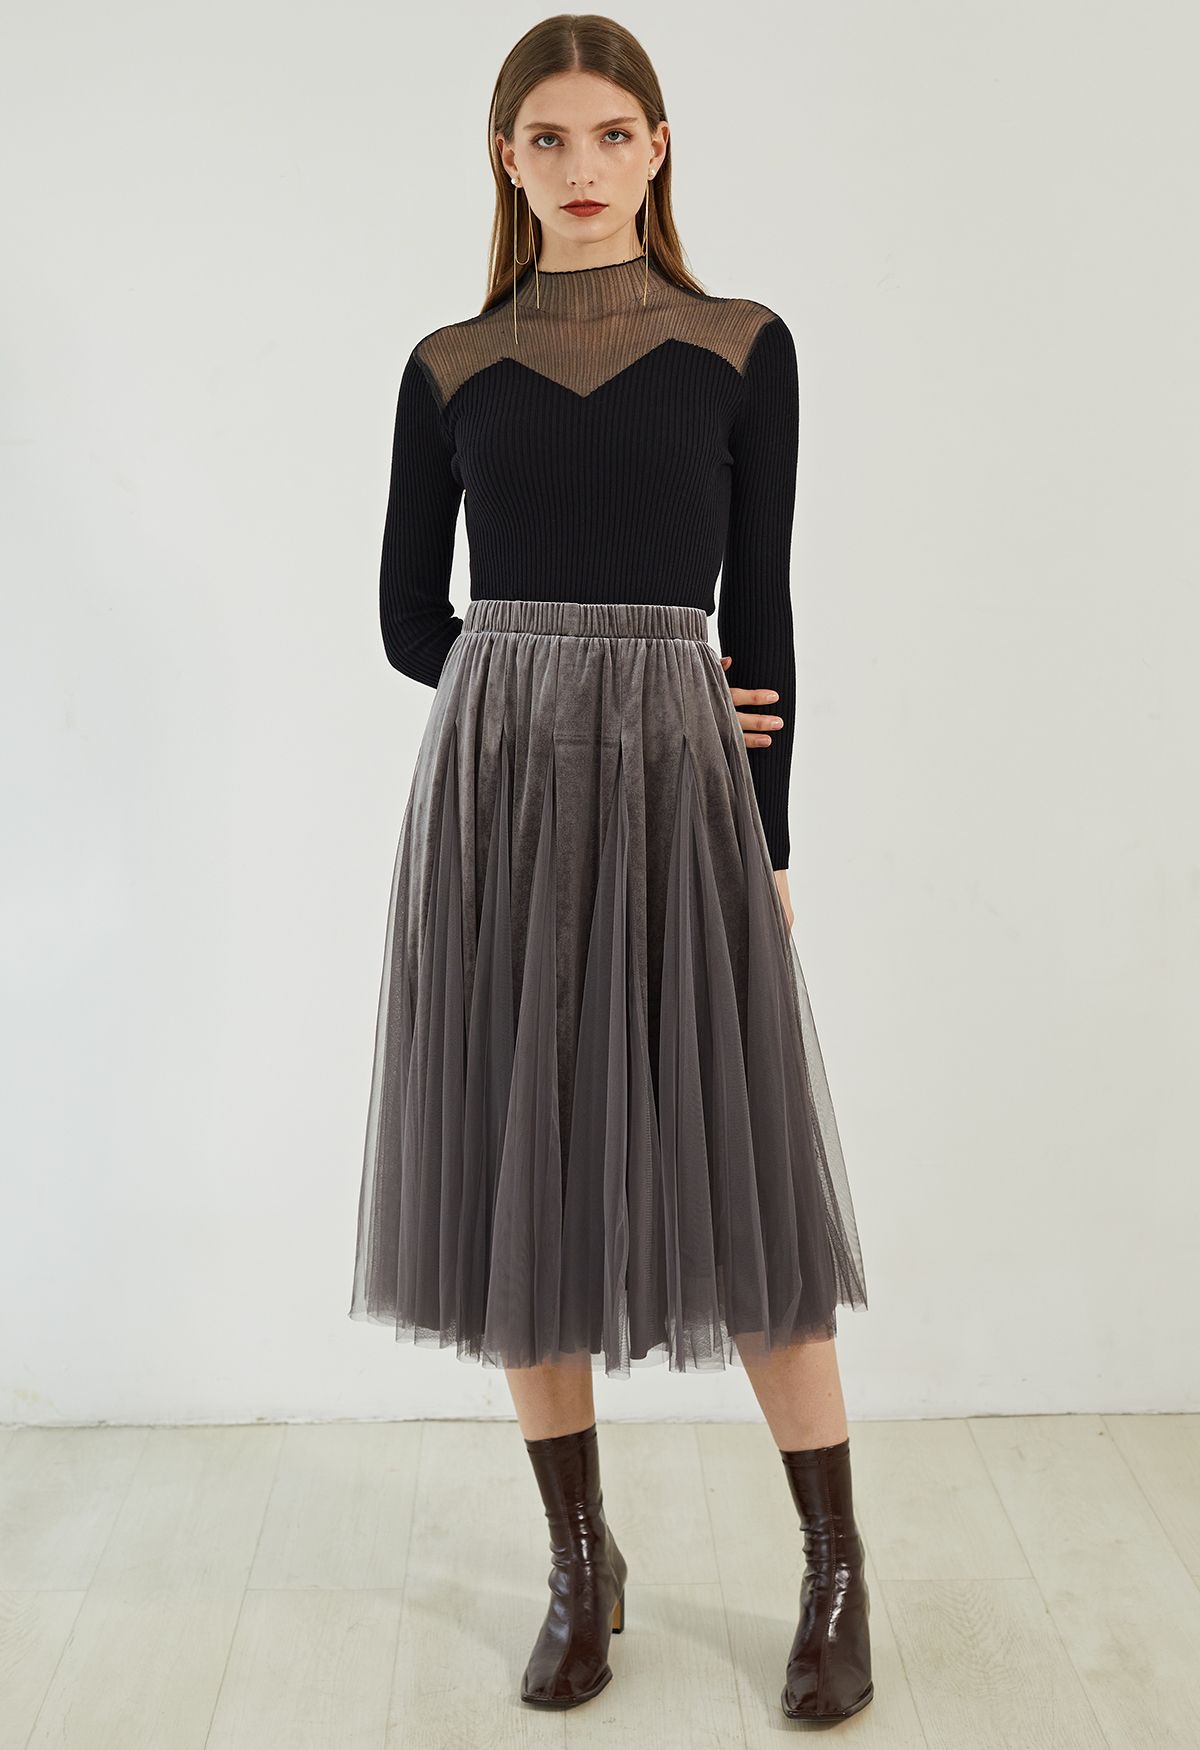 Falda midi con paneles de malla de terciopelo en gris